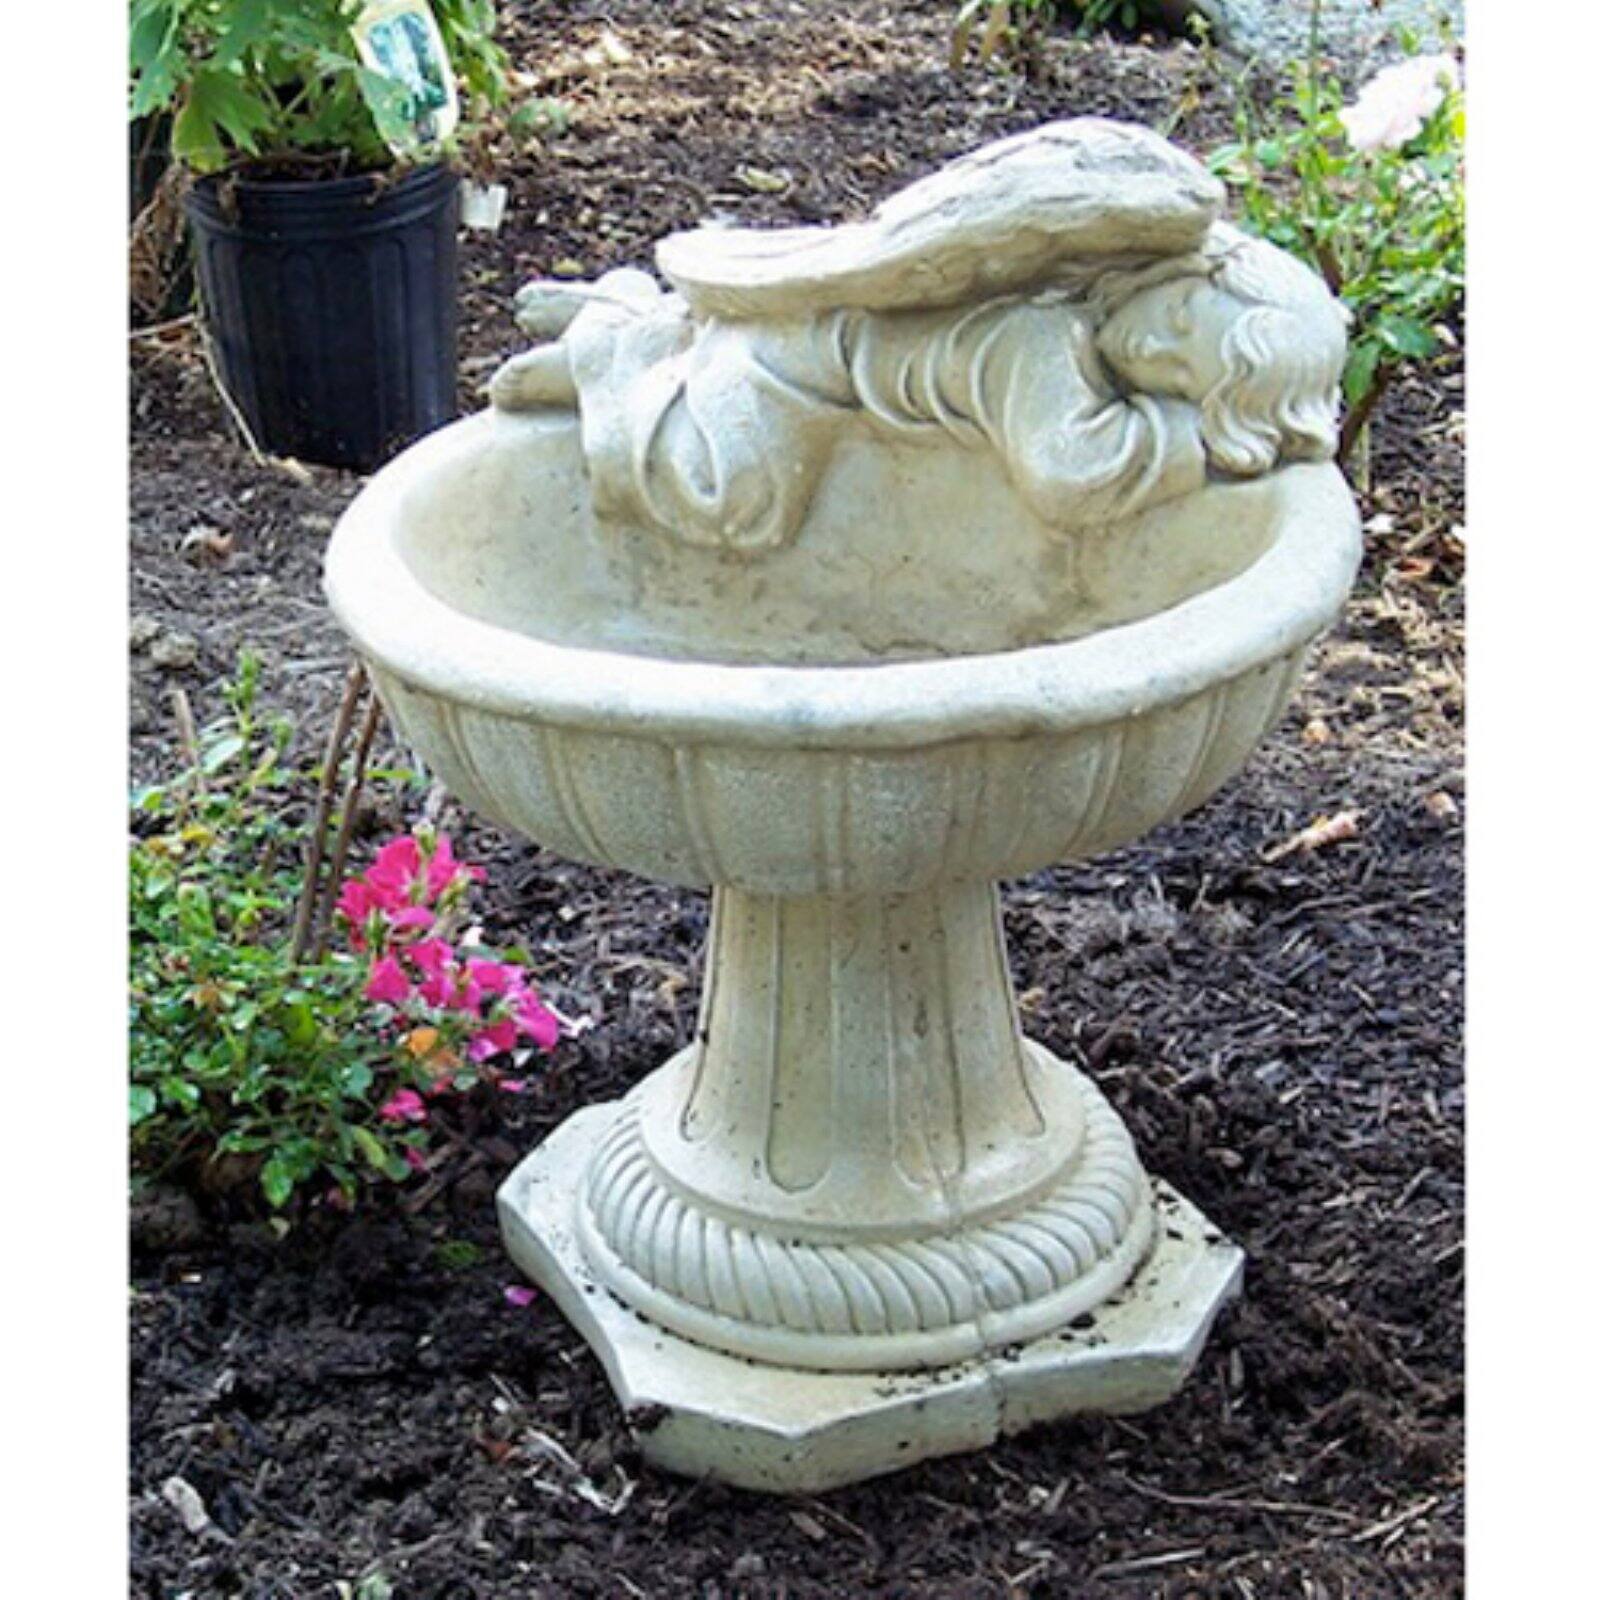 Athena Garden Cast Stone Heavenly Angel Bird Bath - image 1 of 2